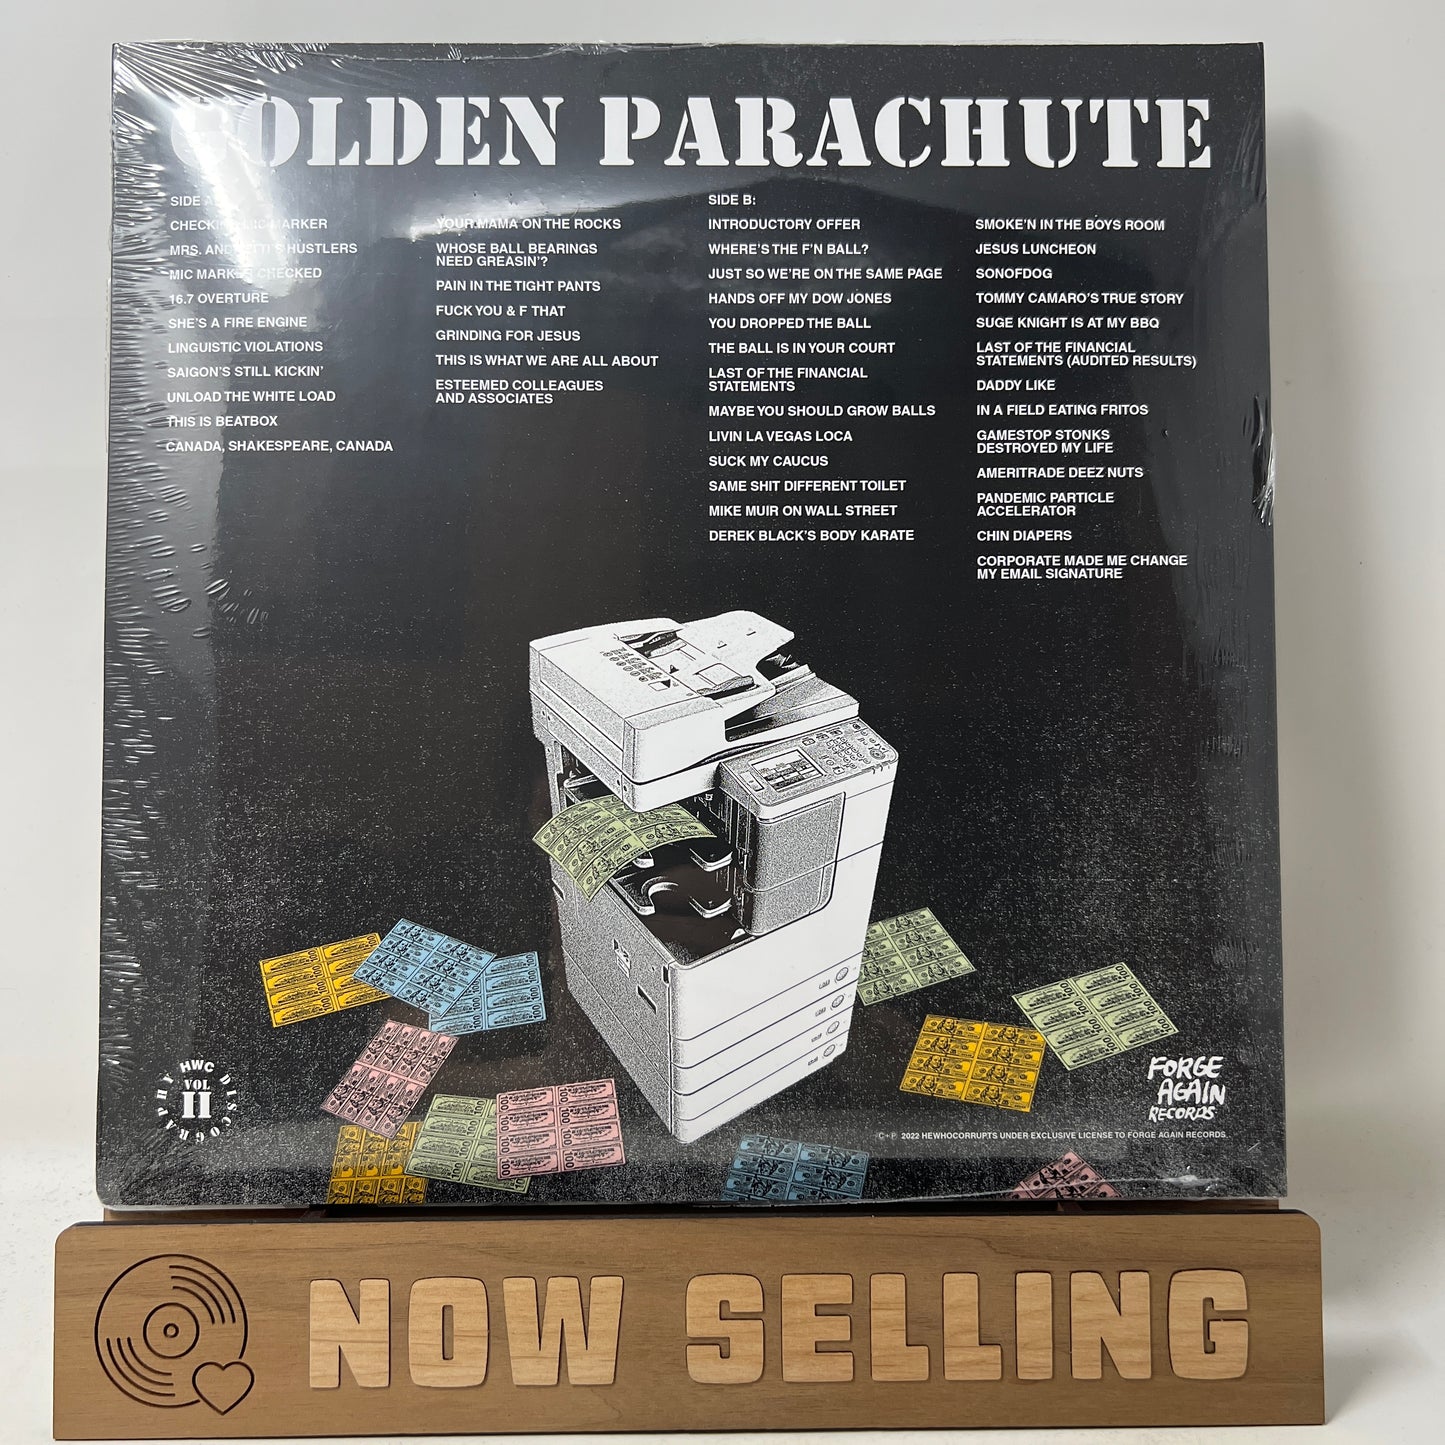 Hewhocorrupts - Golden Parachute Vinyl LP Metallic Gold SEALED